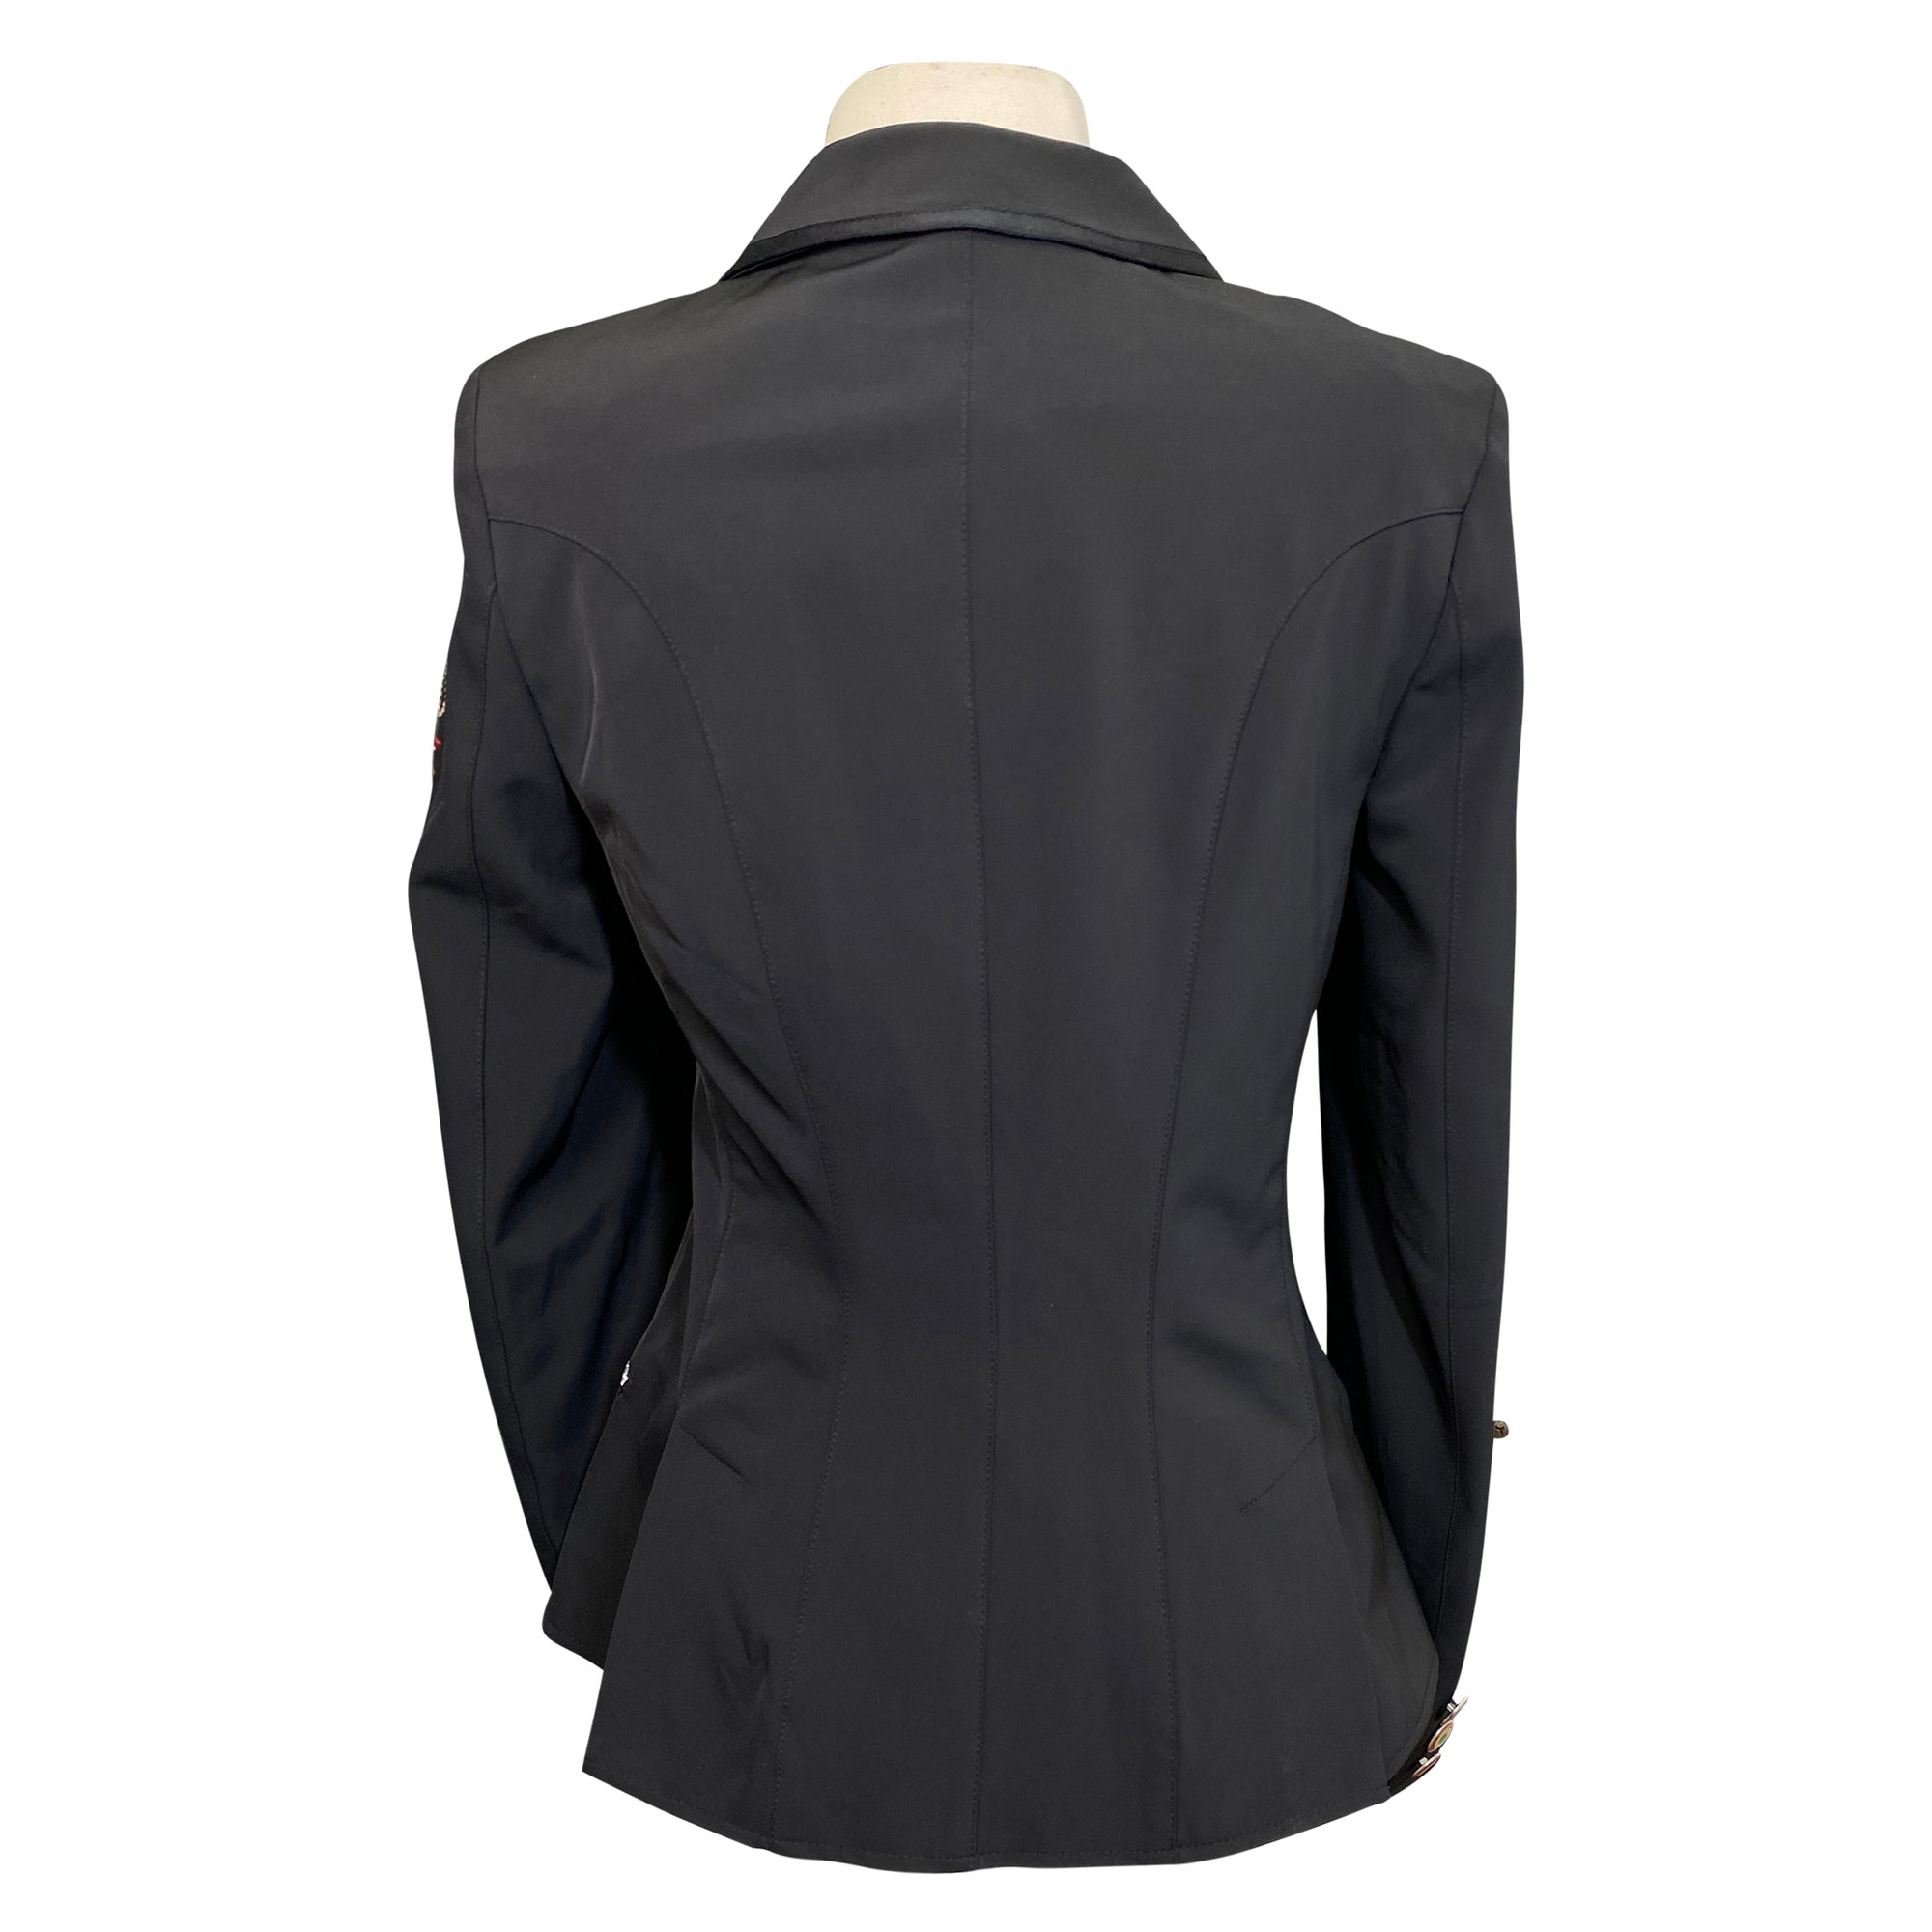 Iris Bayer Technical Show Jacket in Black